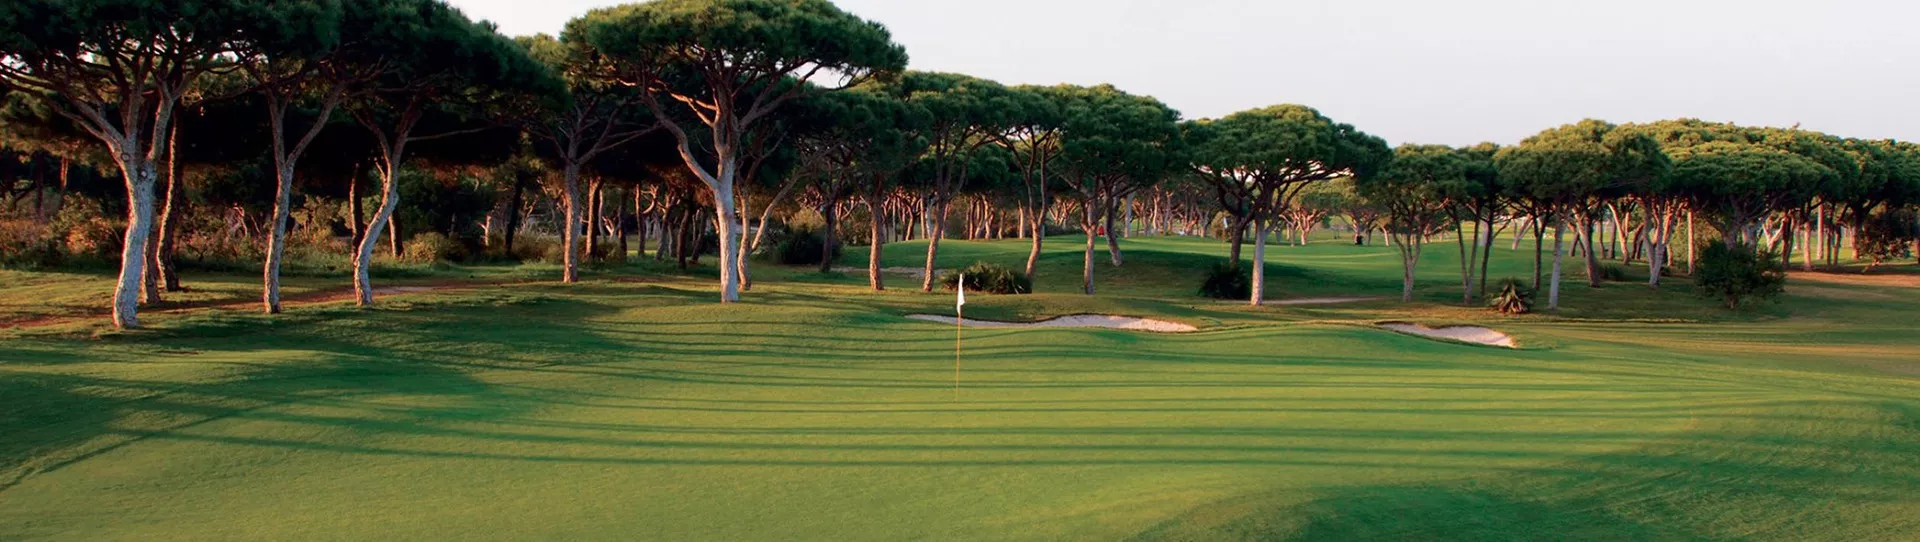 Portugal golf courses - Pine Cliffs Golf - Photo 1